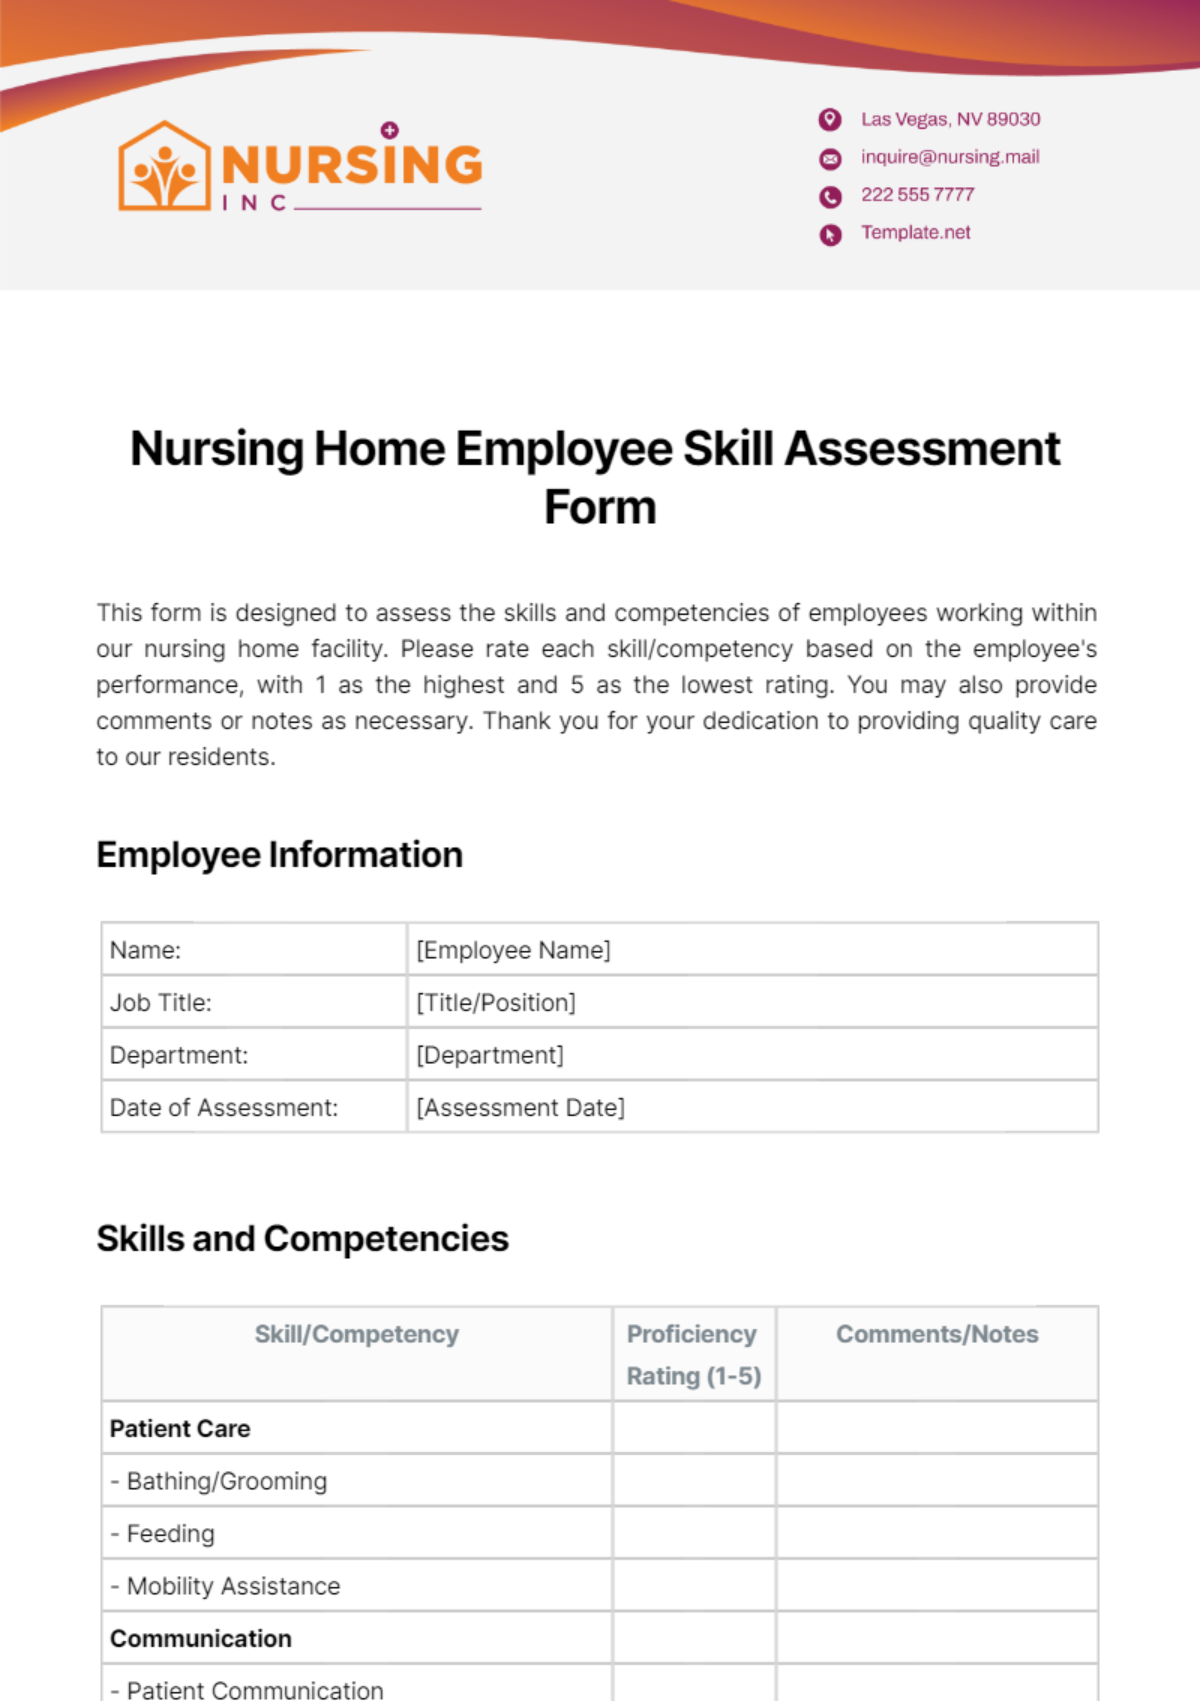 Nursing Home Employee Skill Assessment Form Template